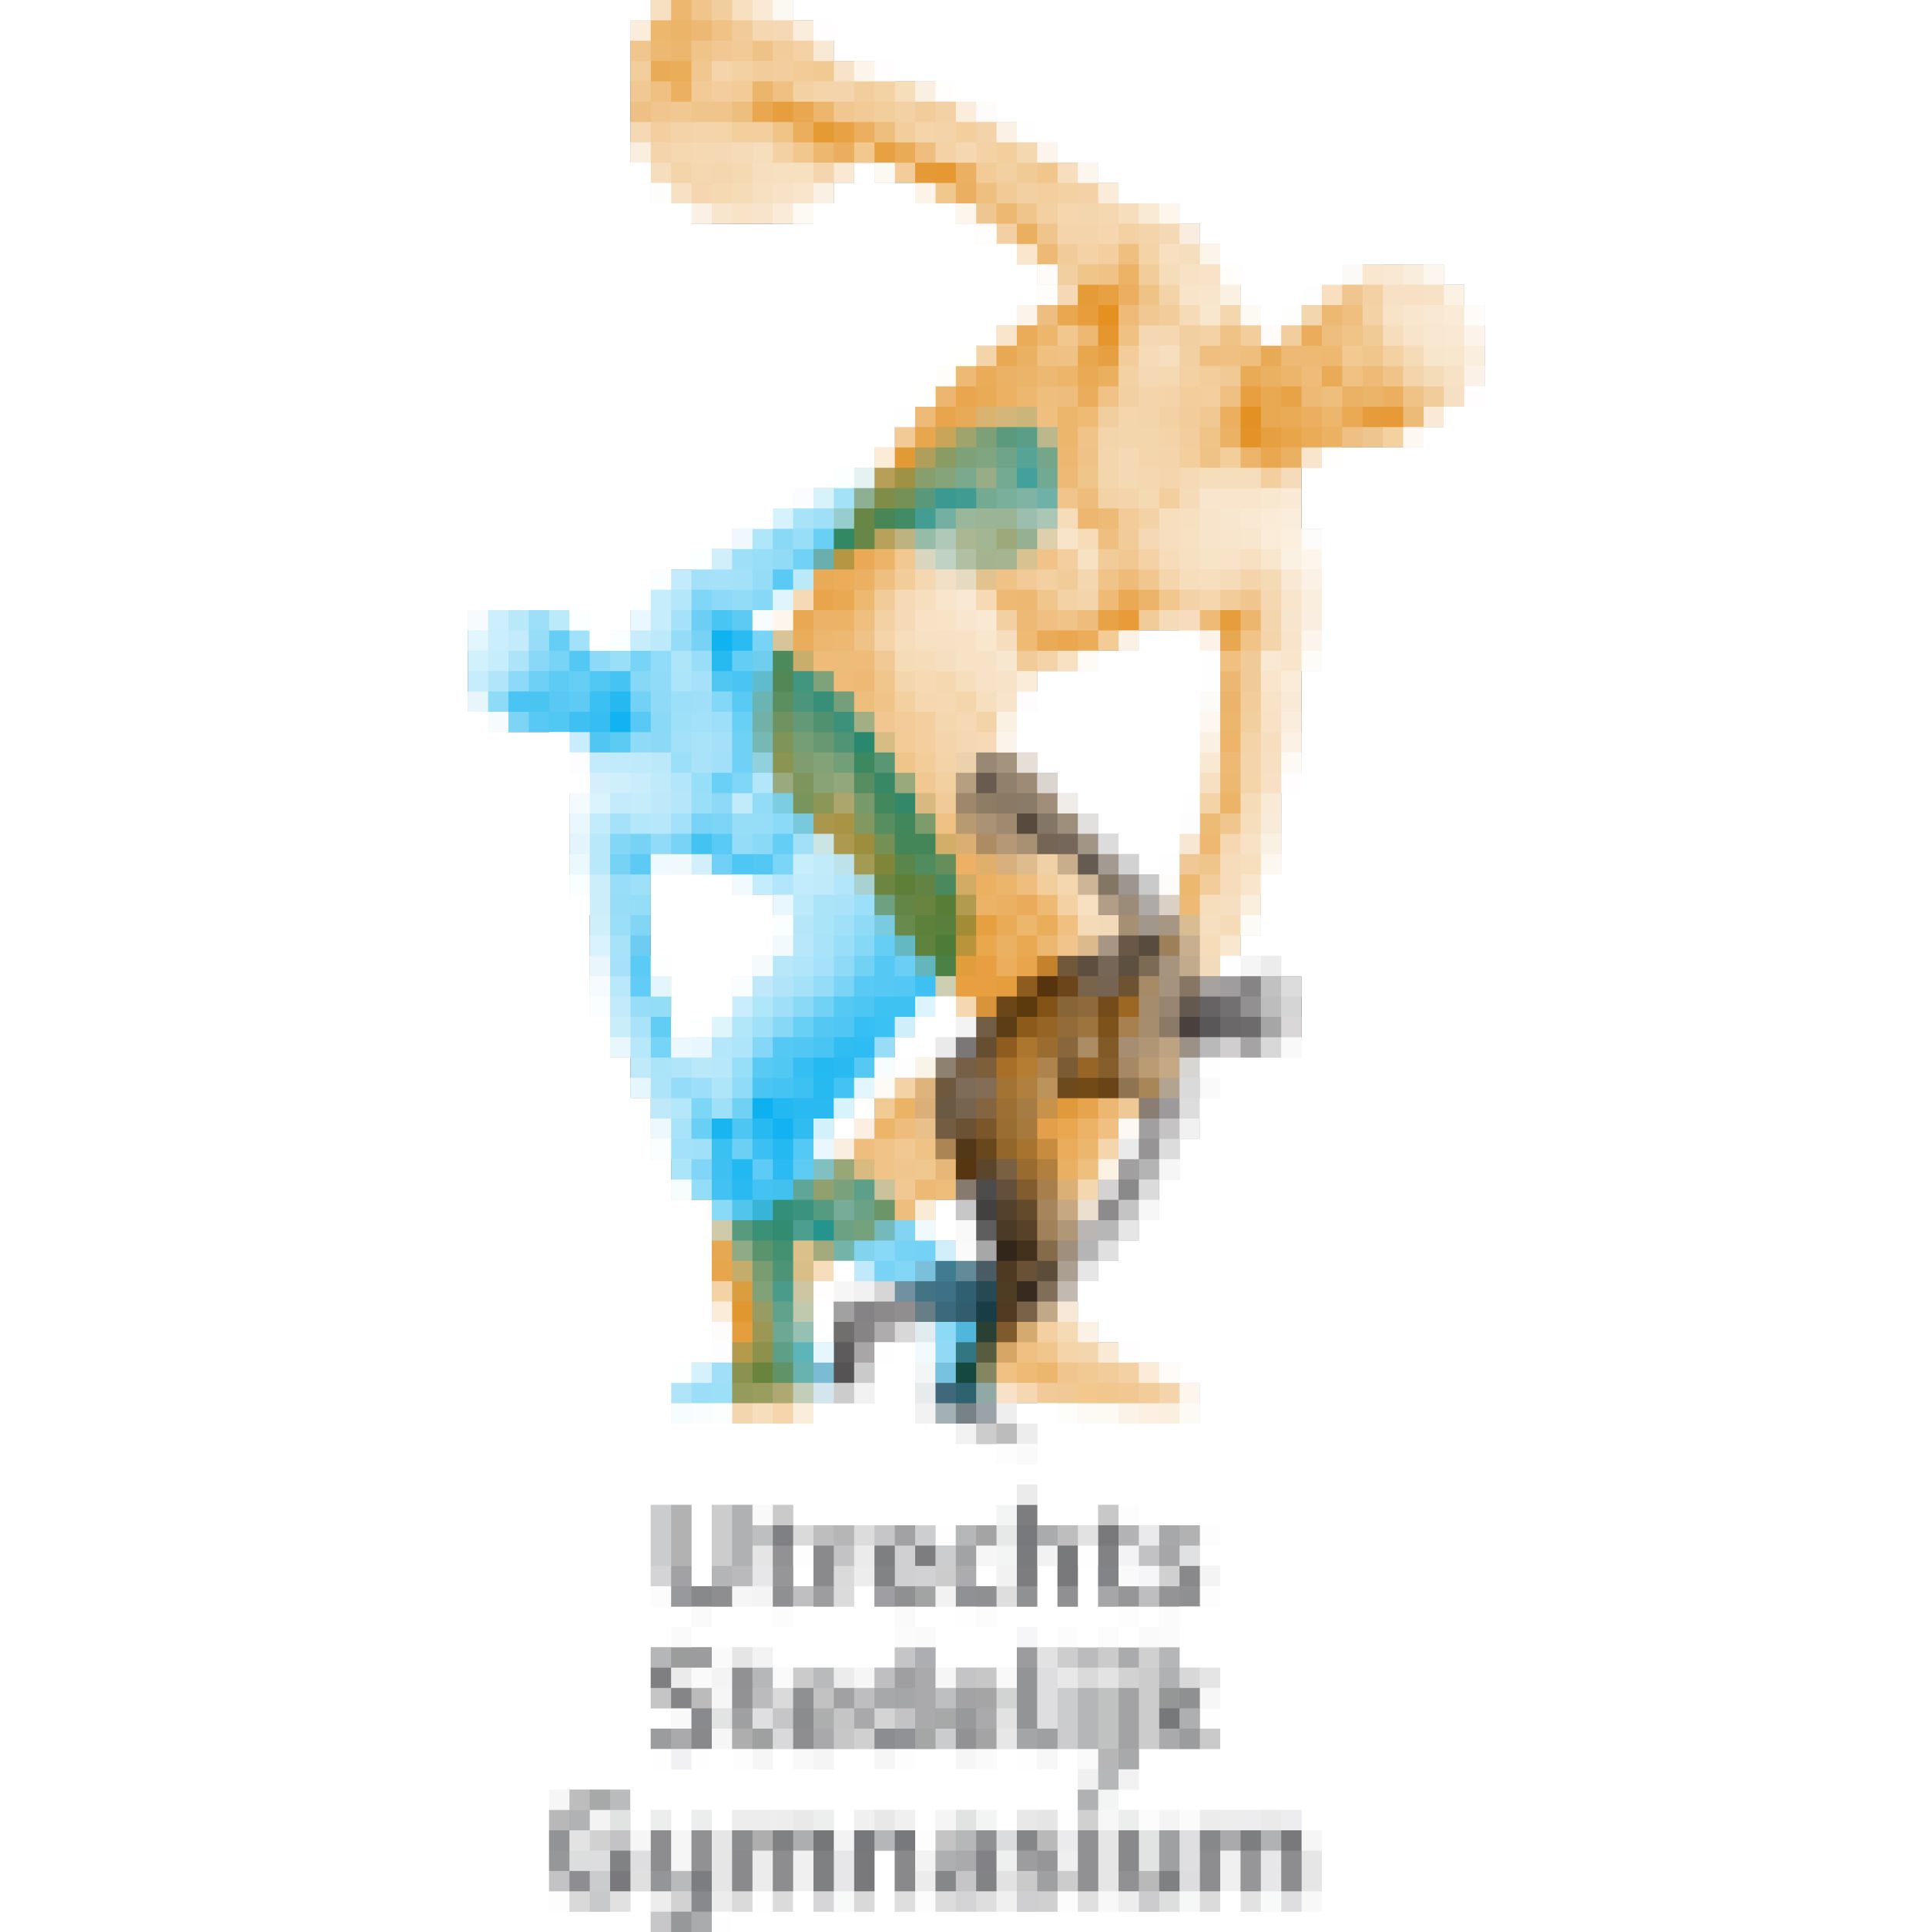 Utrechts Stedelijk Gymnasium